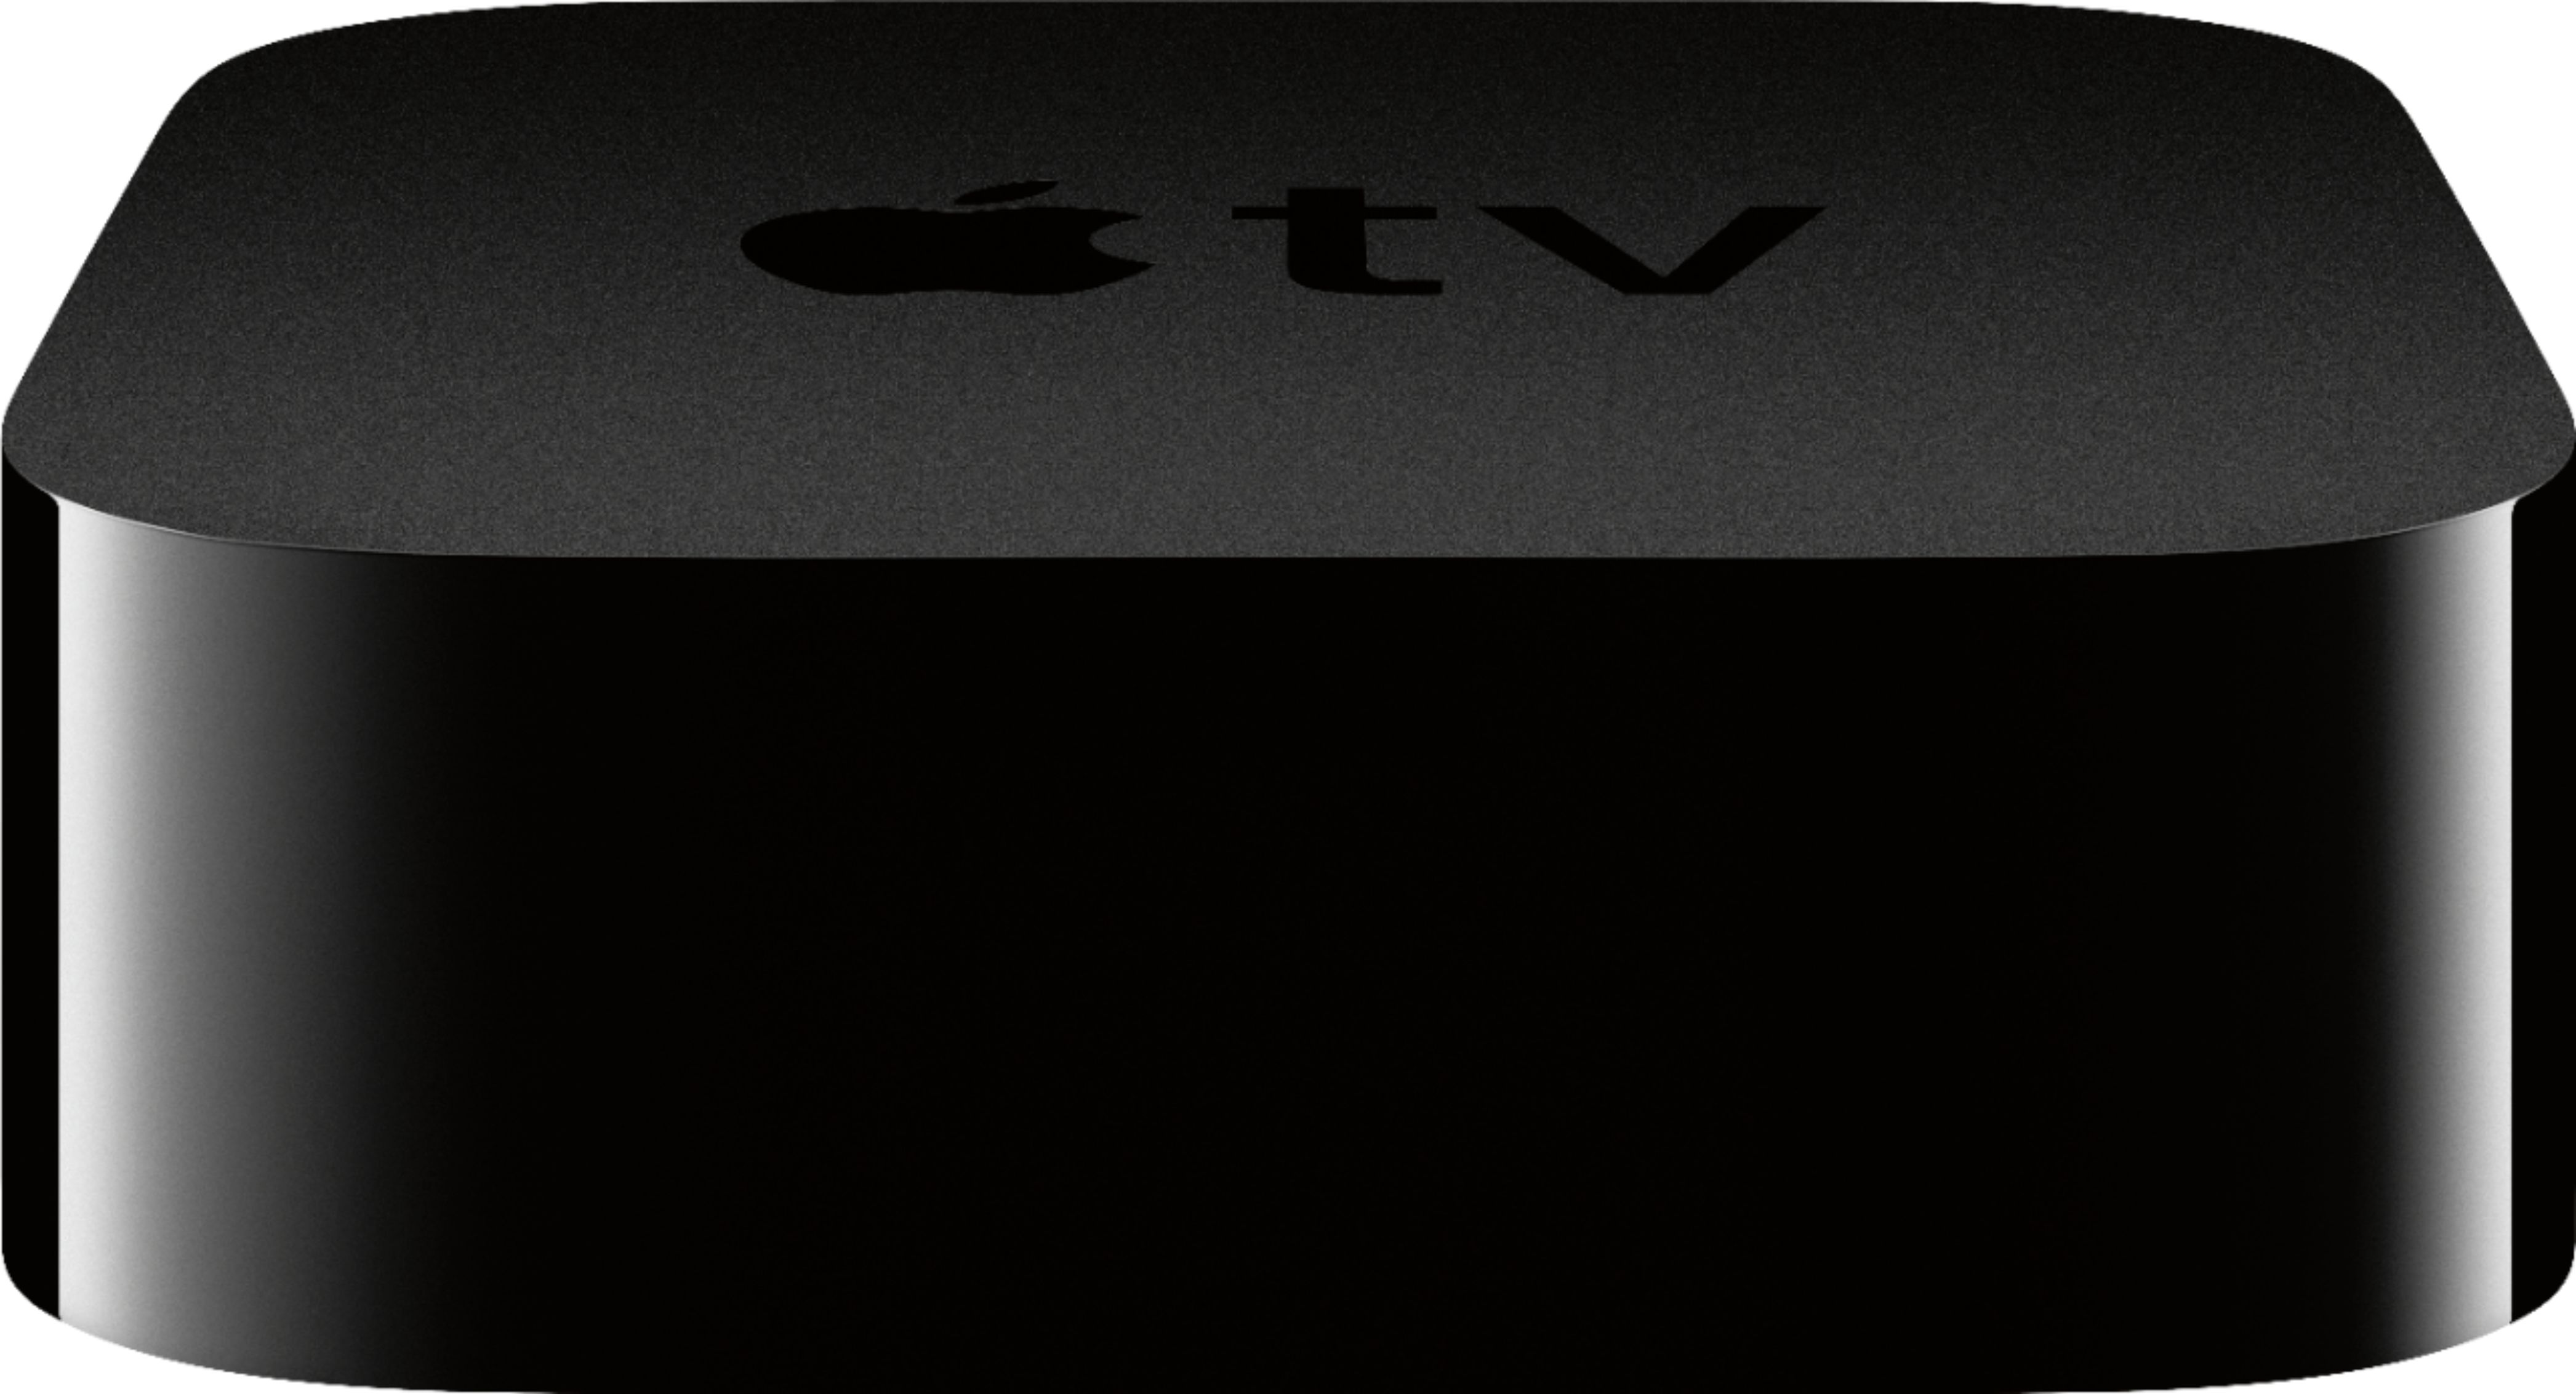 Best Buy: Apple TV HD 32GB Black MR912LL/A